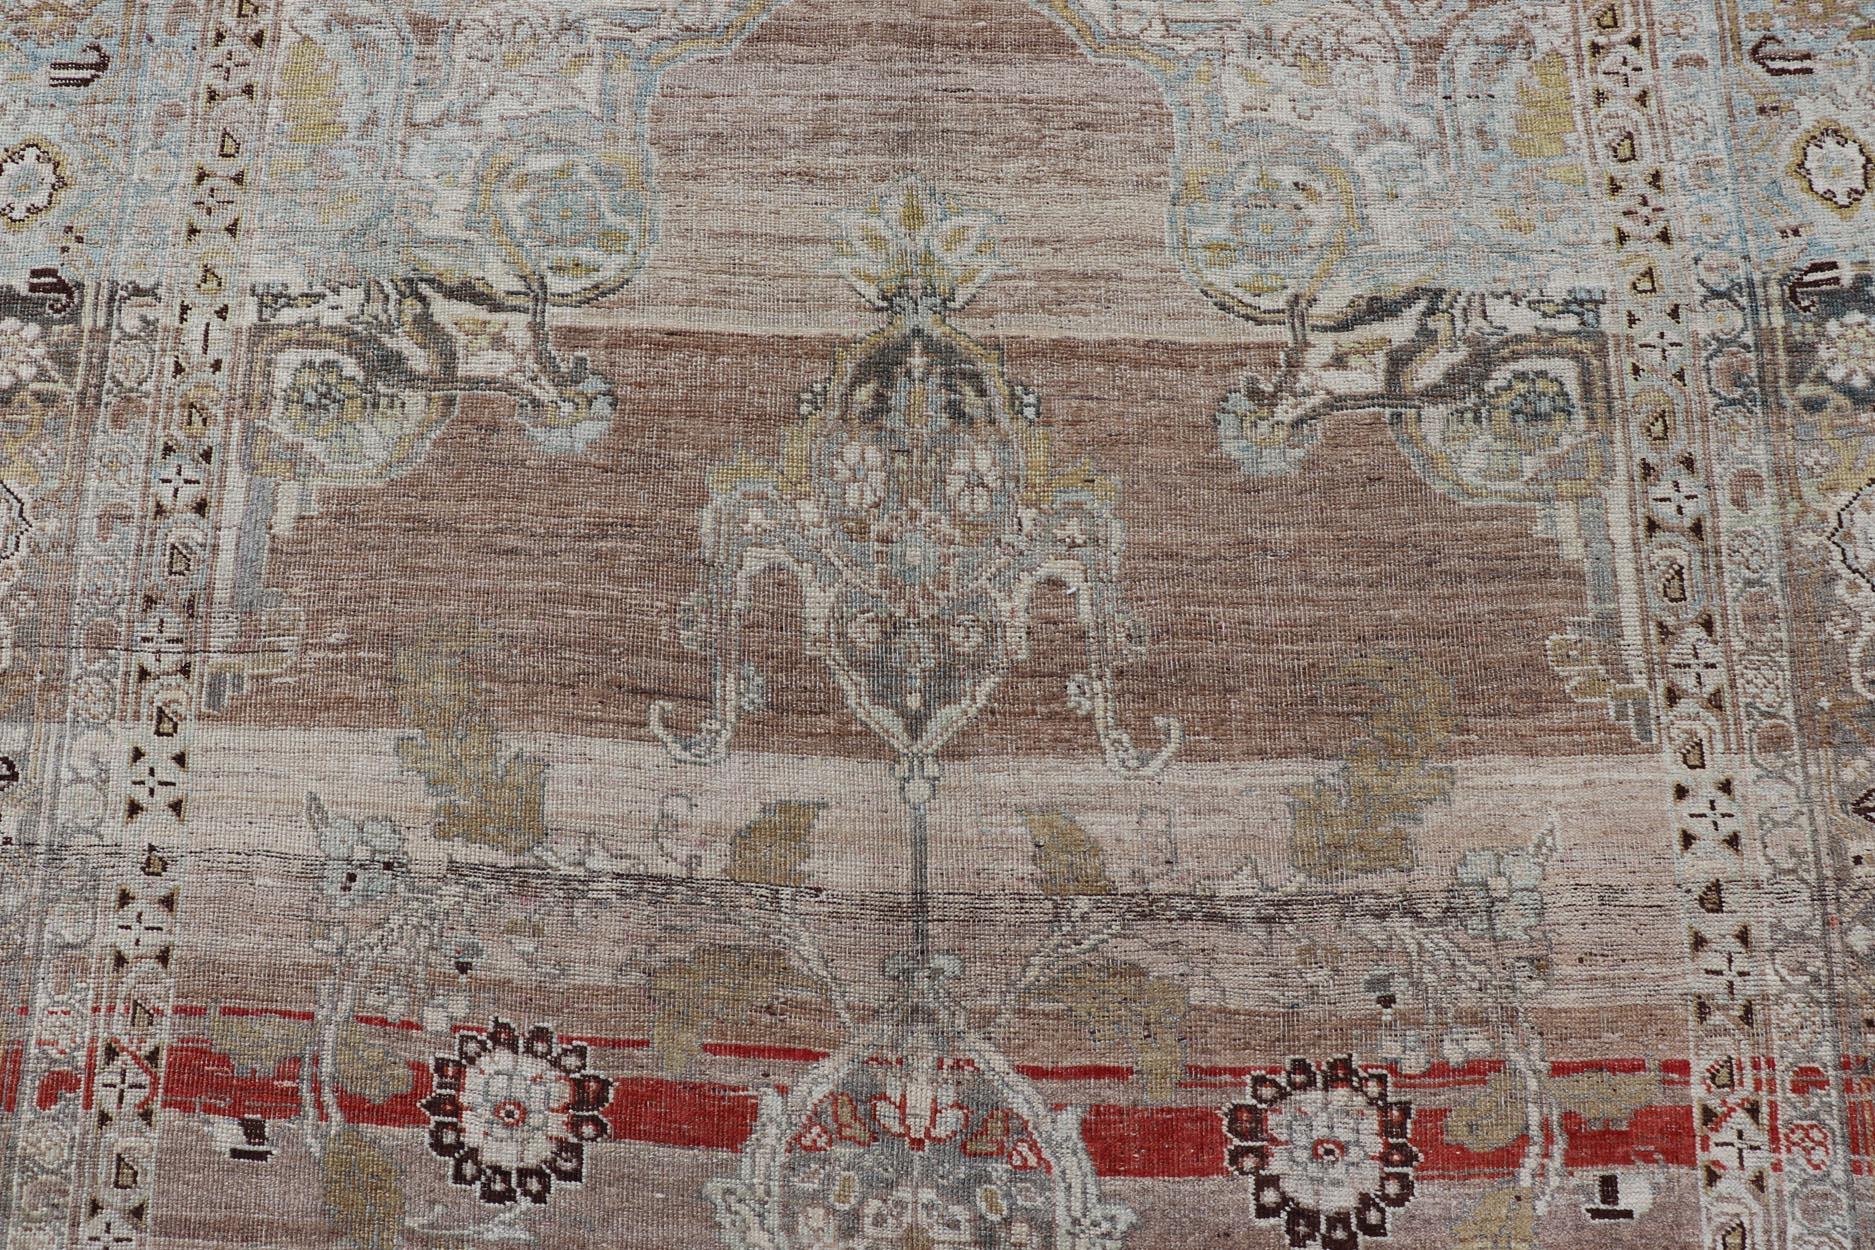 Antique tapis persan Bidjar avec grand médaillon floral et fleuri Vining
Keivan Woven Arts / tapis tra-506, pays d'origine / type : Iran / Bidjar, vers 1890
Mesures : 6'1 x 11'2 
Ce tapis bidjar ancien présente un grand médaillon central entouré